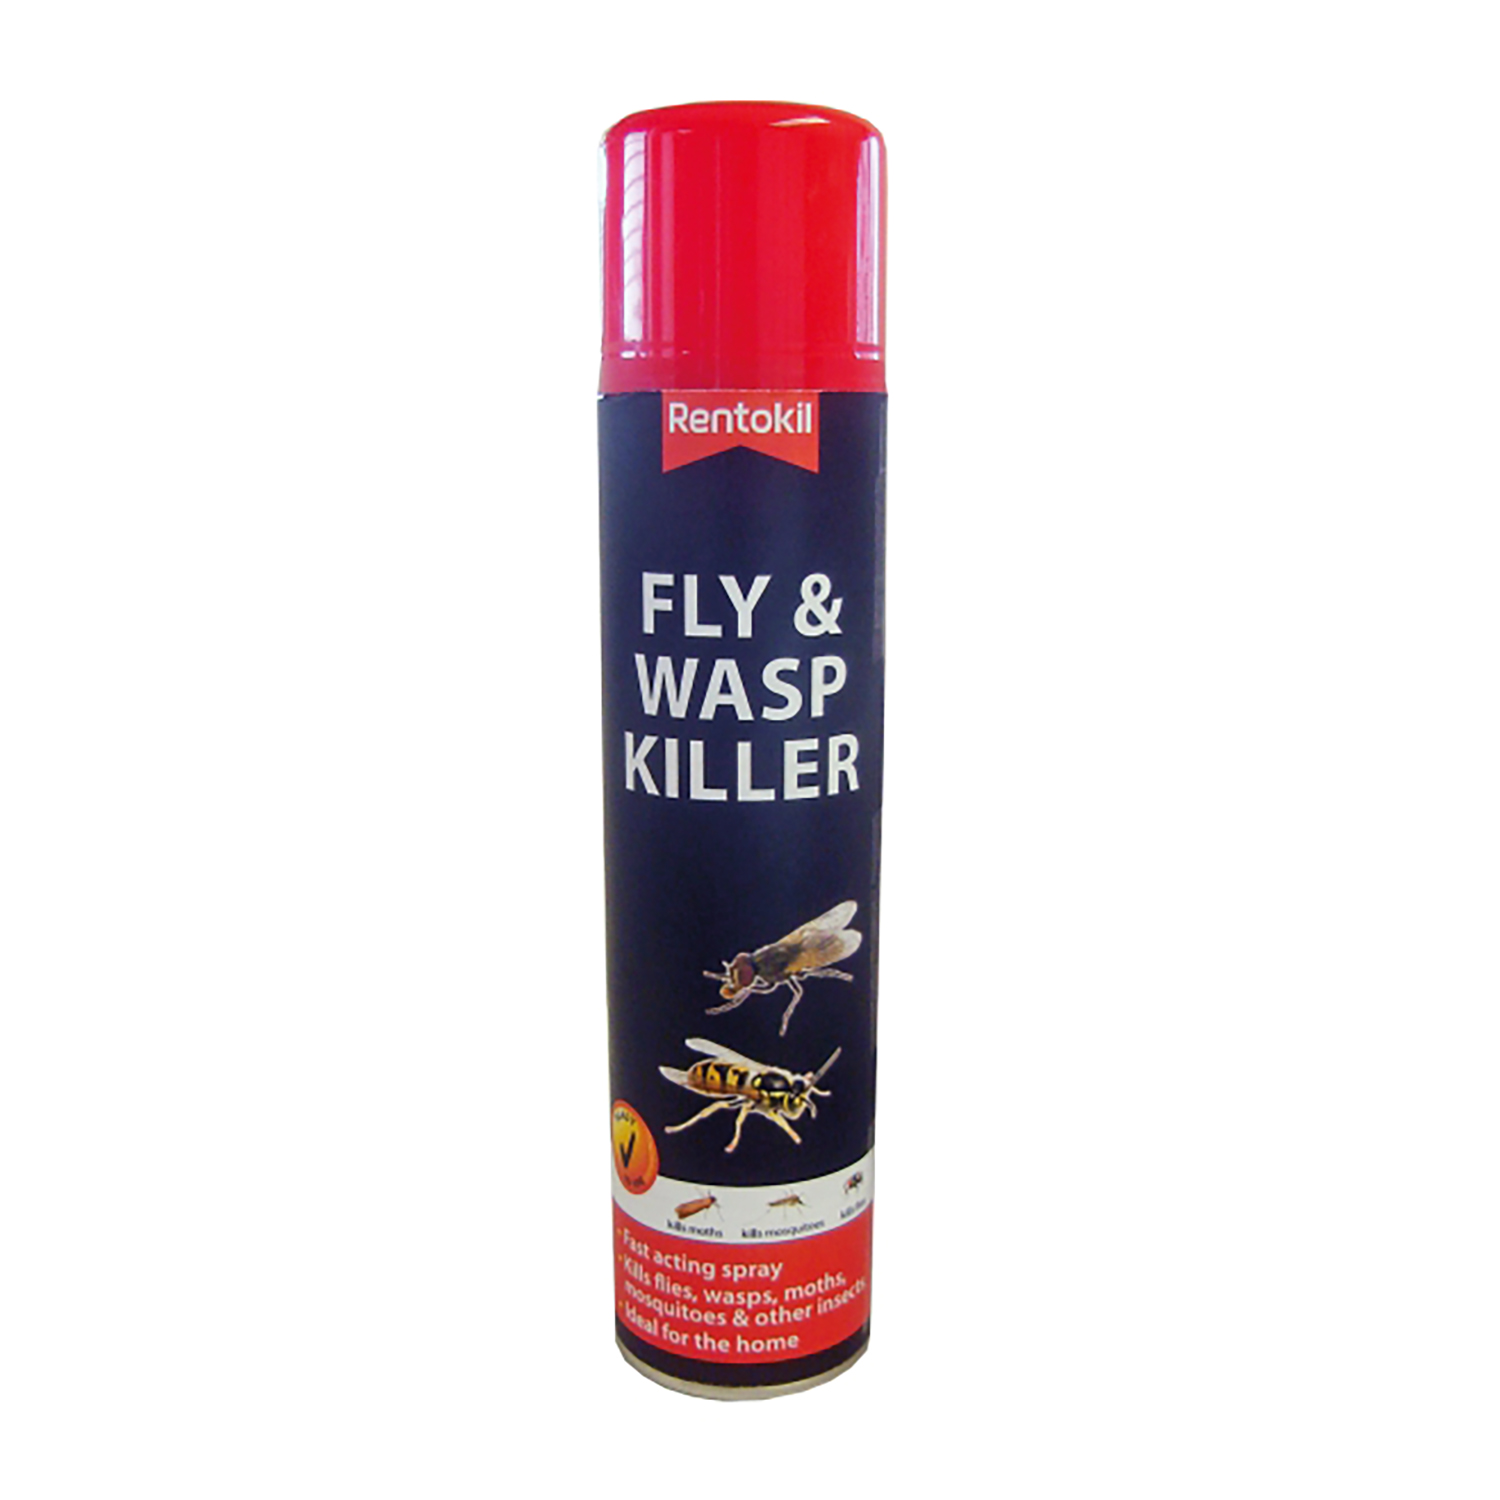 RENTOKIL FLY & WASP KILLER SPRAY 300 ML